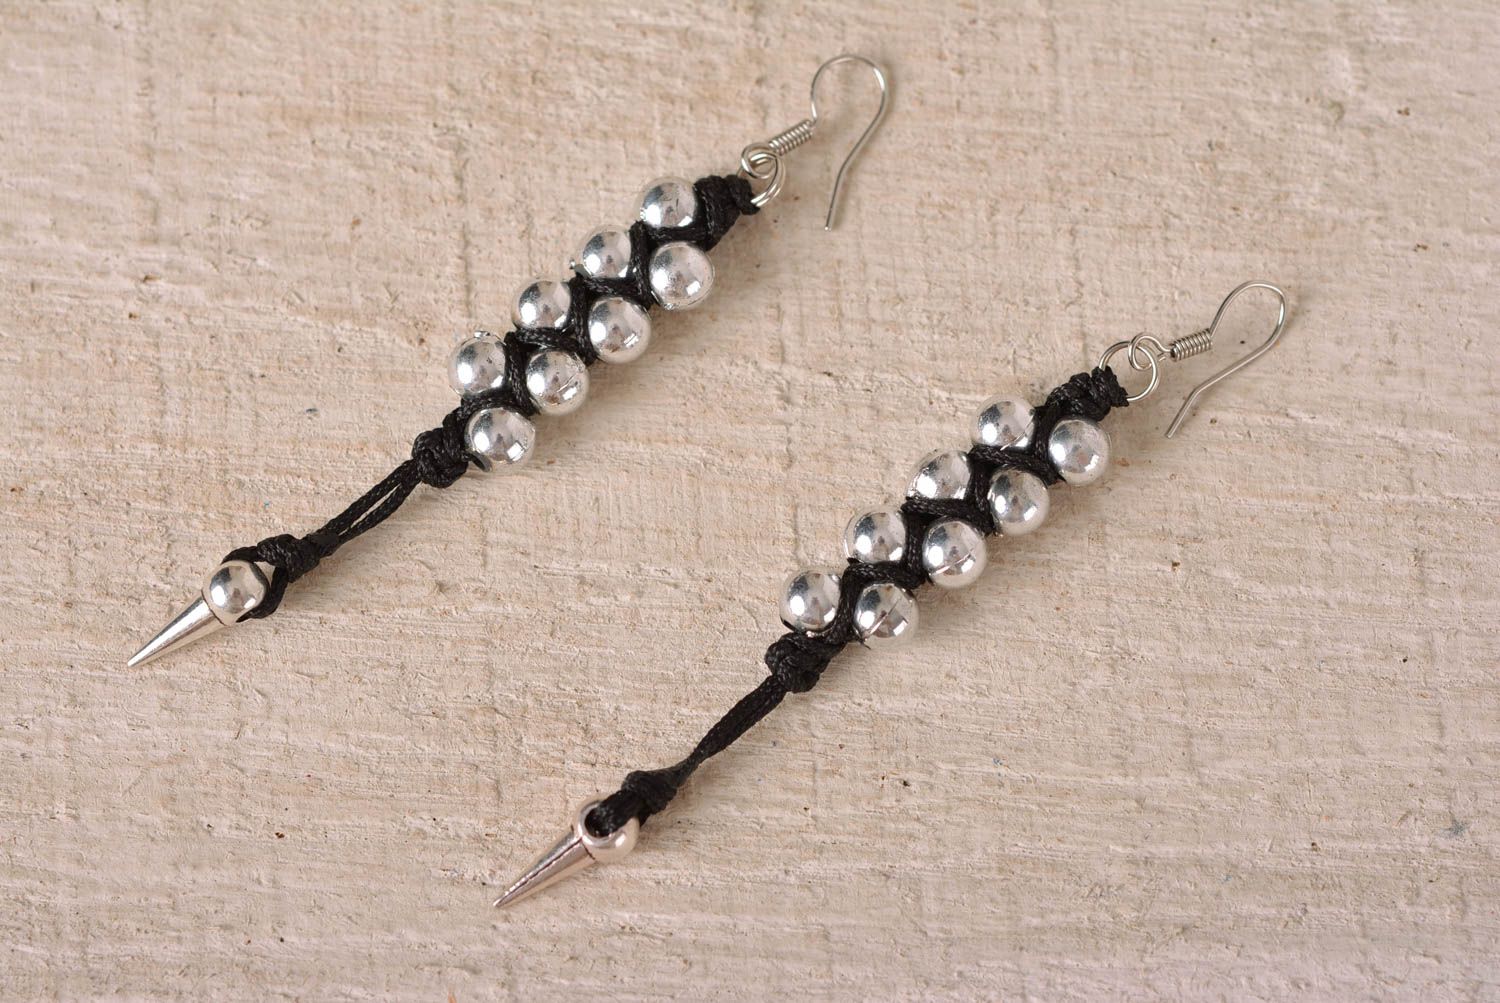 Woven earrings macrame earrings handmade earrings with beads macrame jewelry photo 1